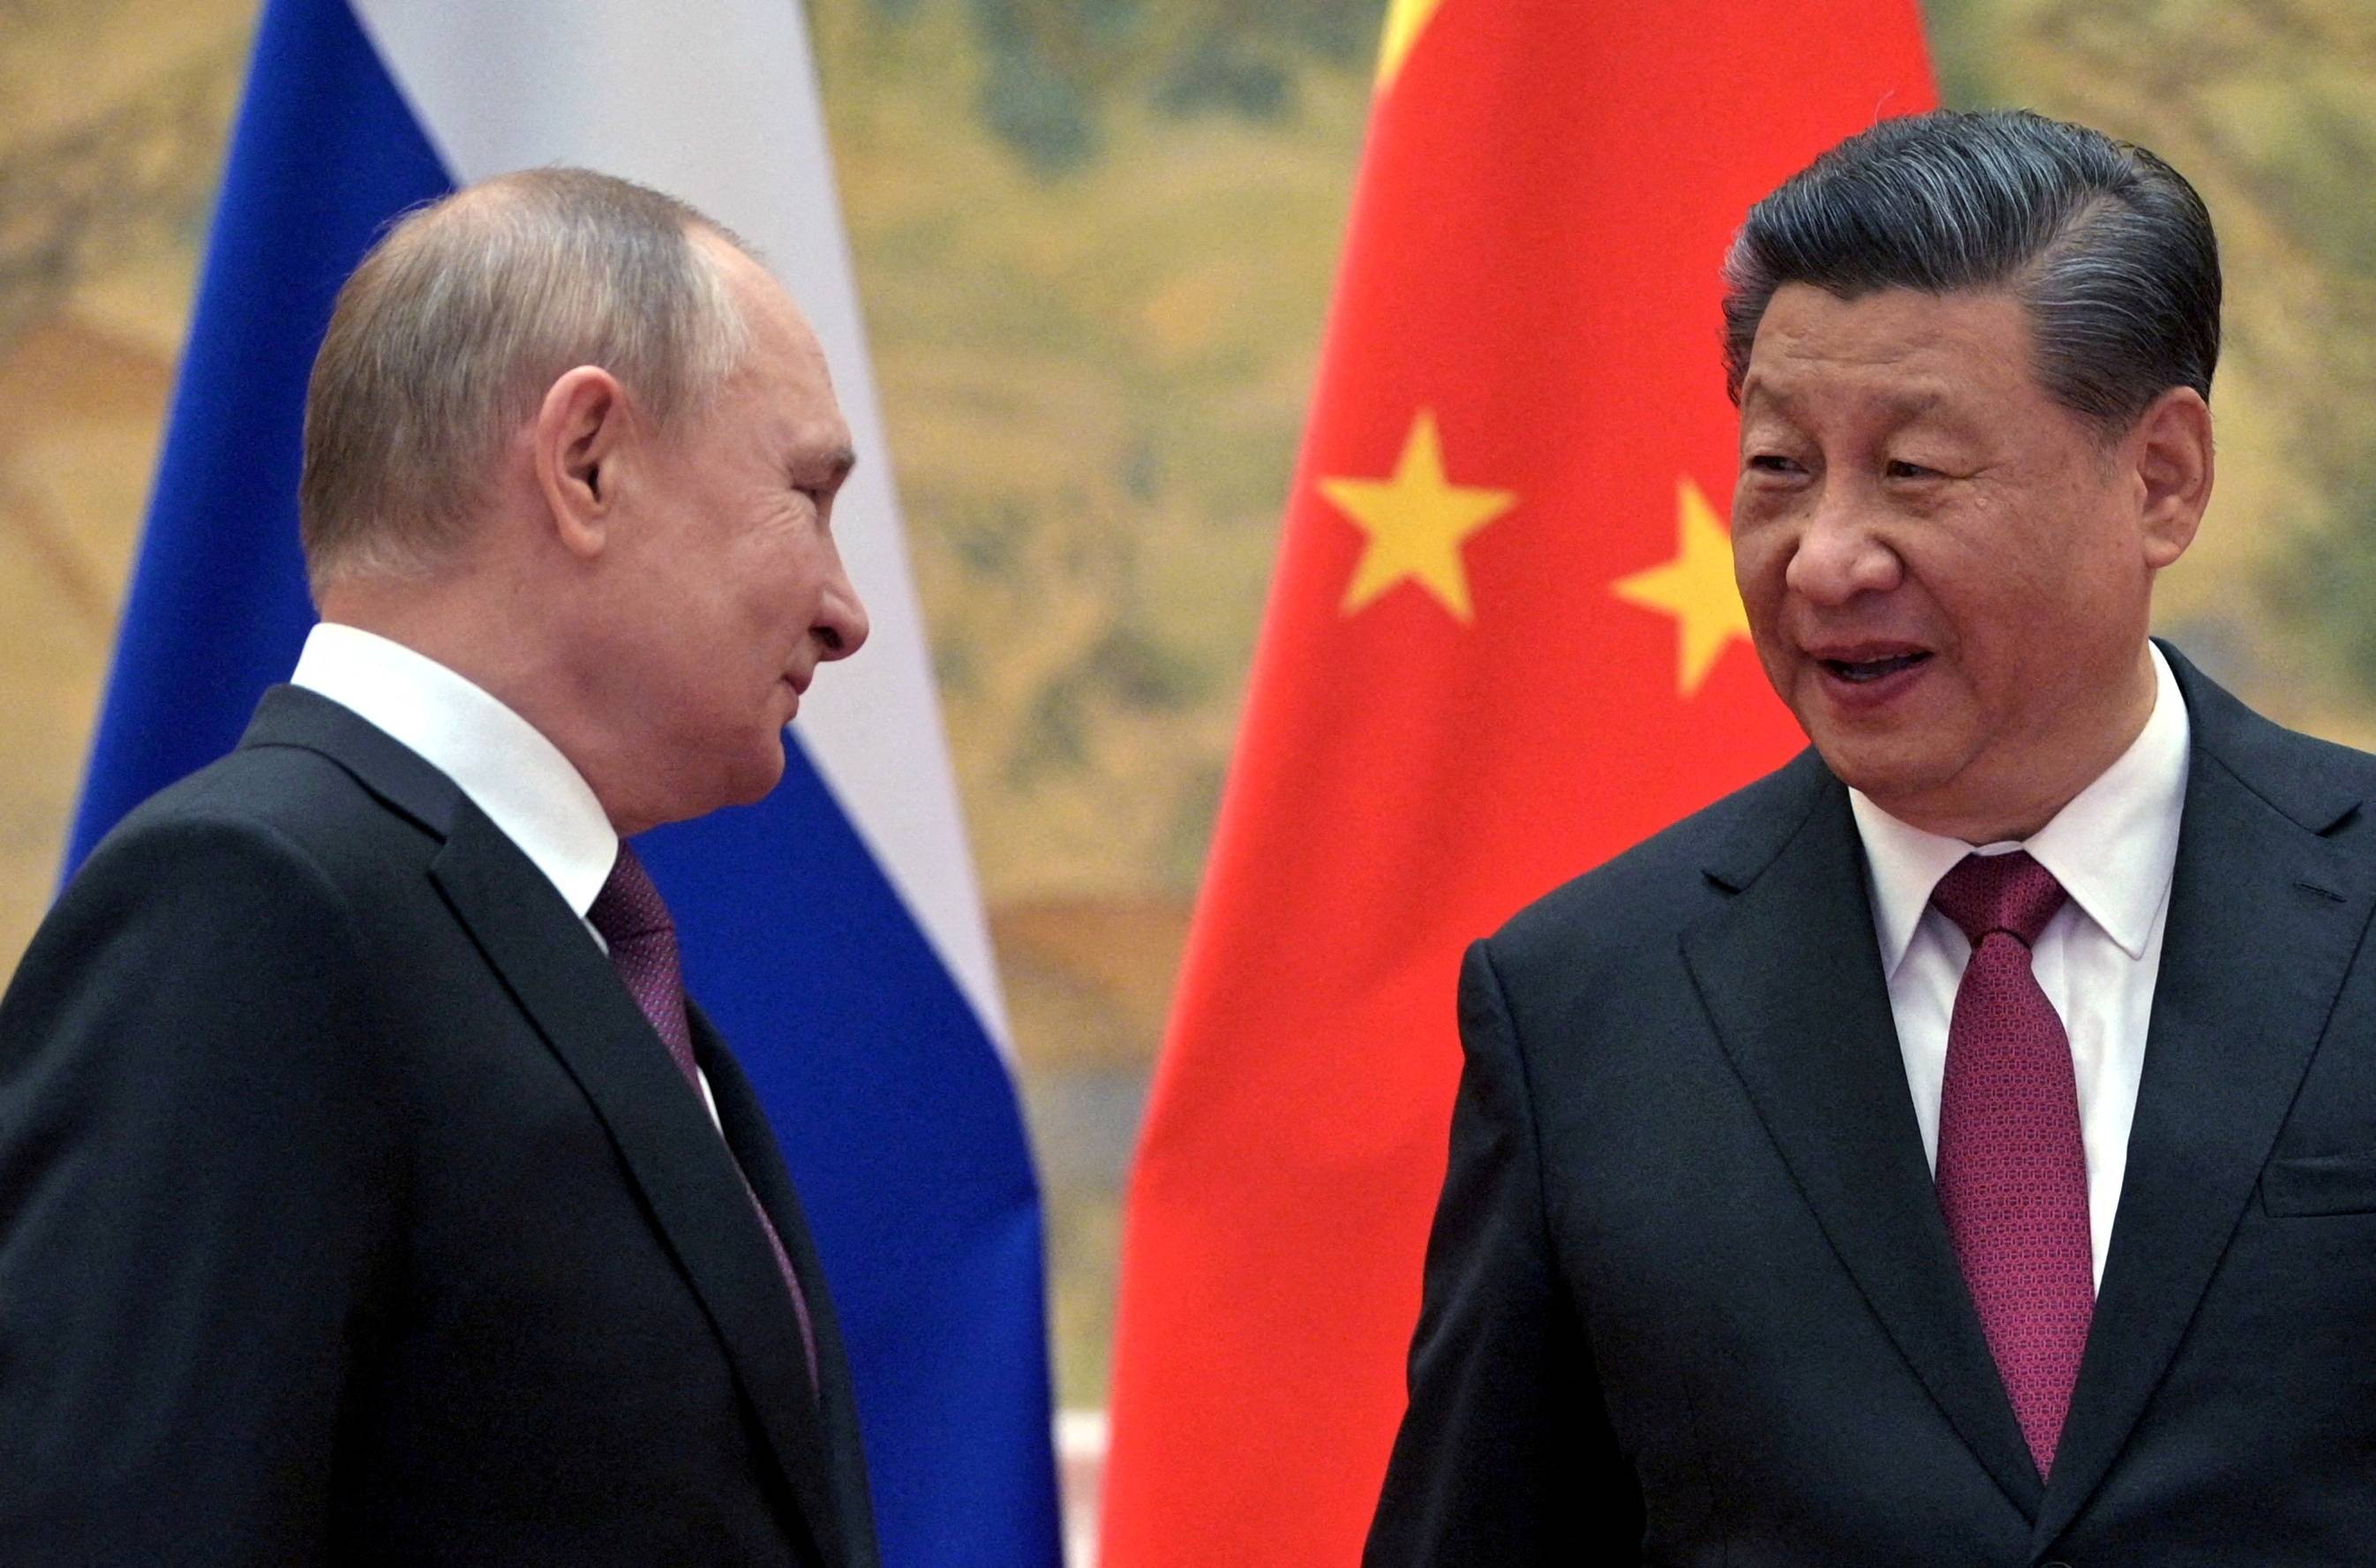 Russian President Vladimir Putin attends a meeting with Chinese leader Xi Jinping in Beijing in February last year.  | SPUTNIK / KREMLIN / VIA REUTERS